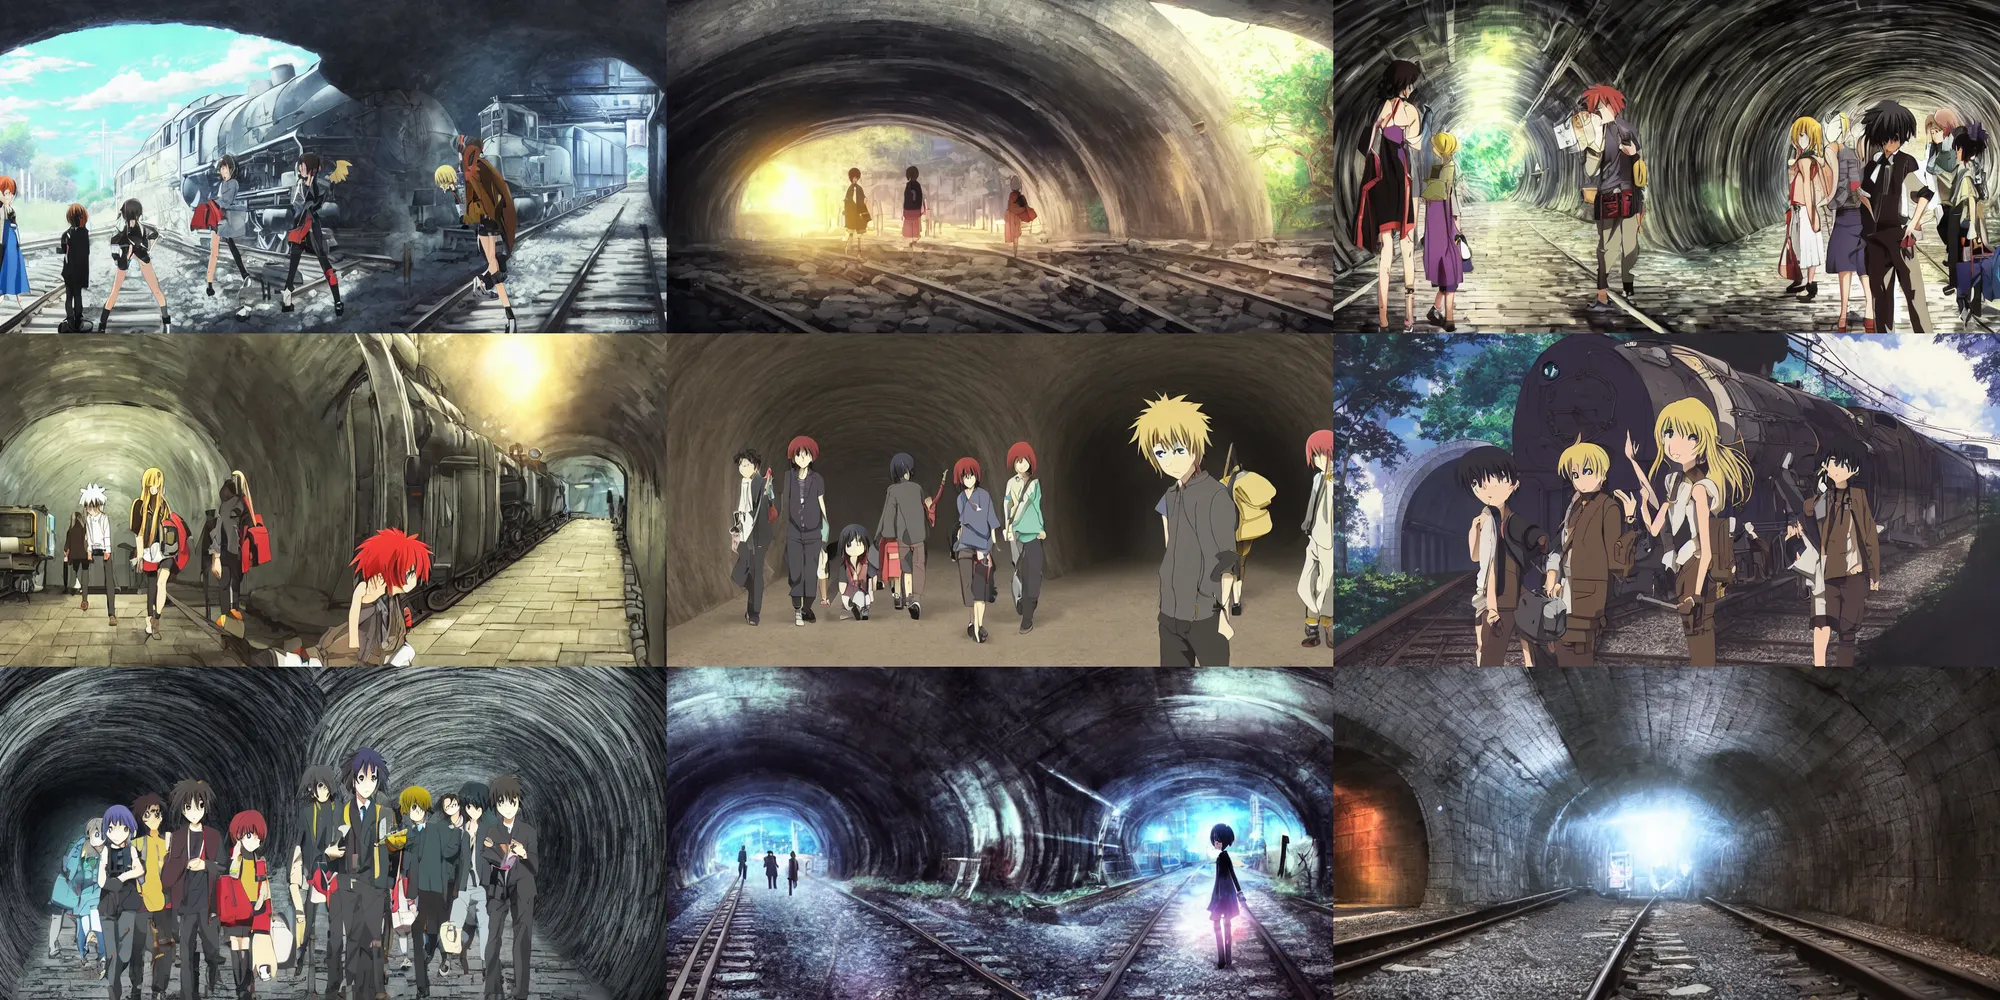 Prompt: anime movie scene, outside a dark train tunnel entrance